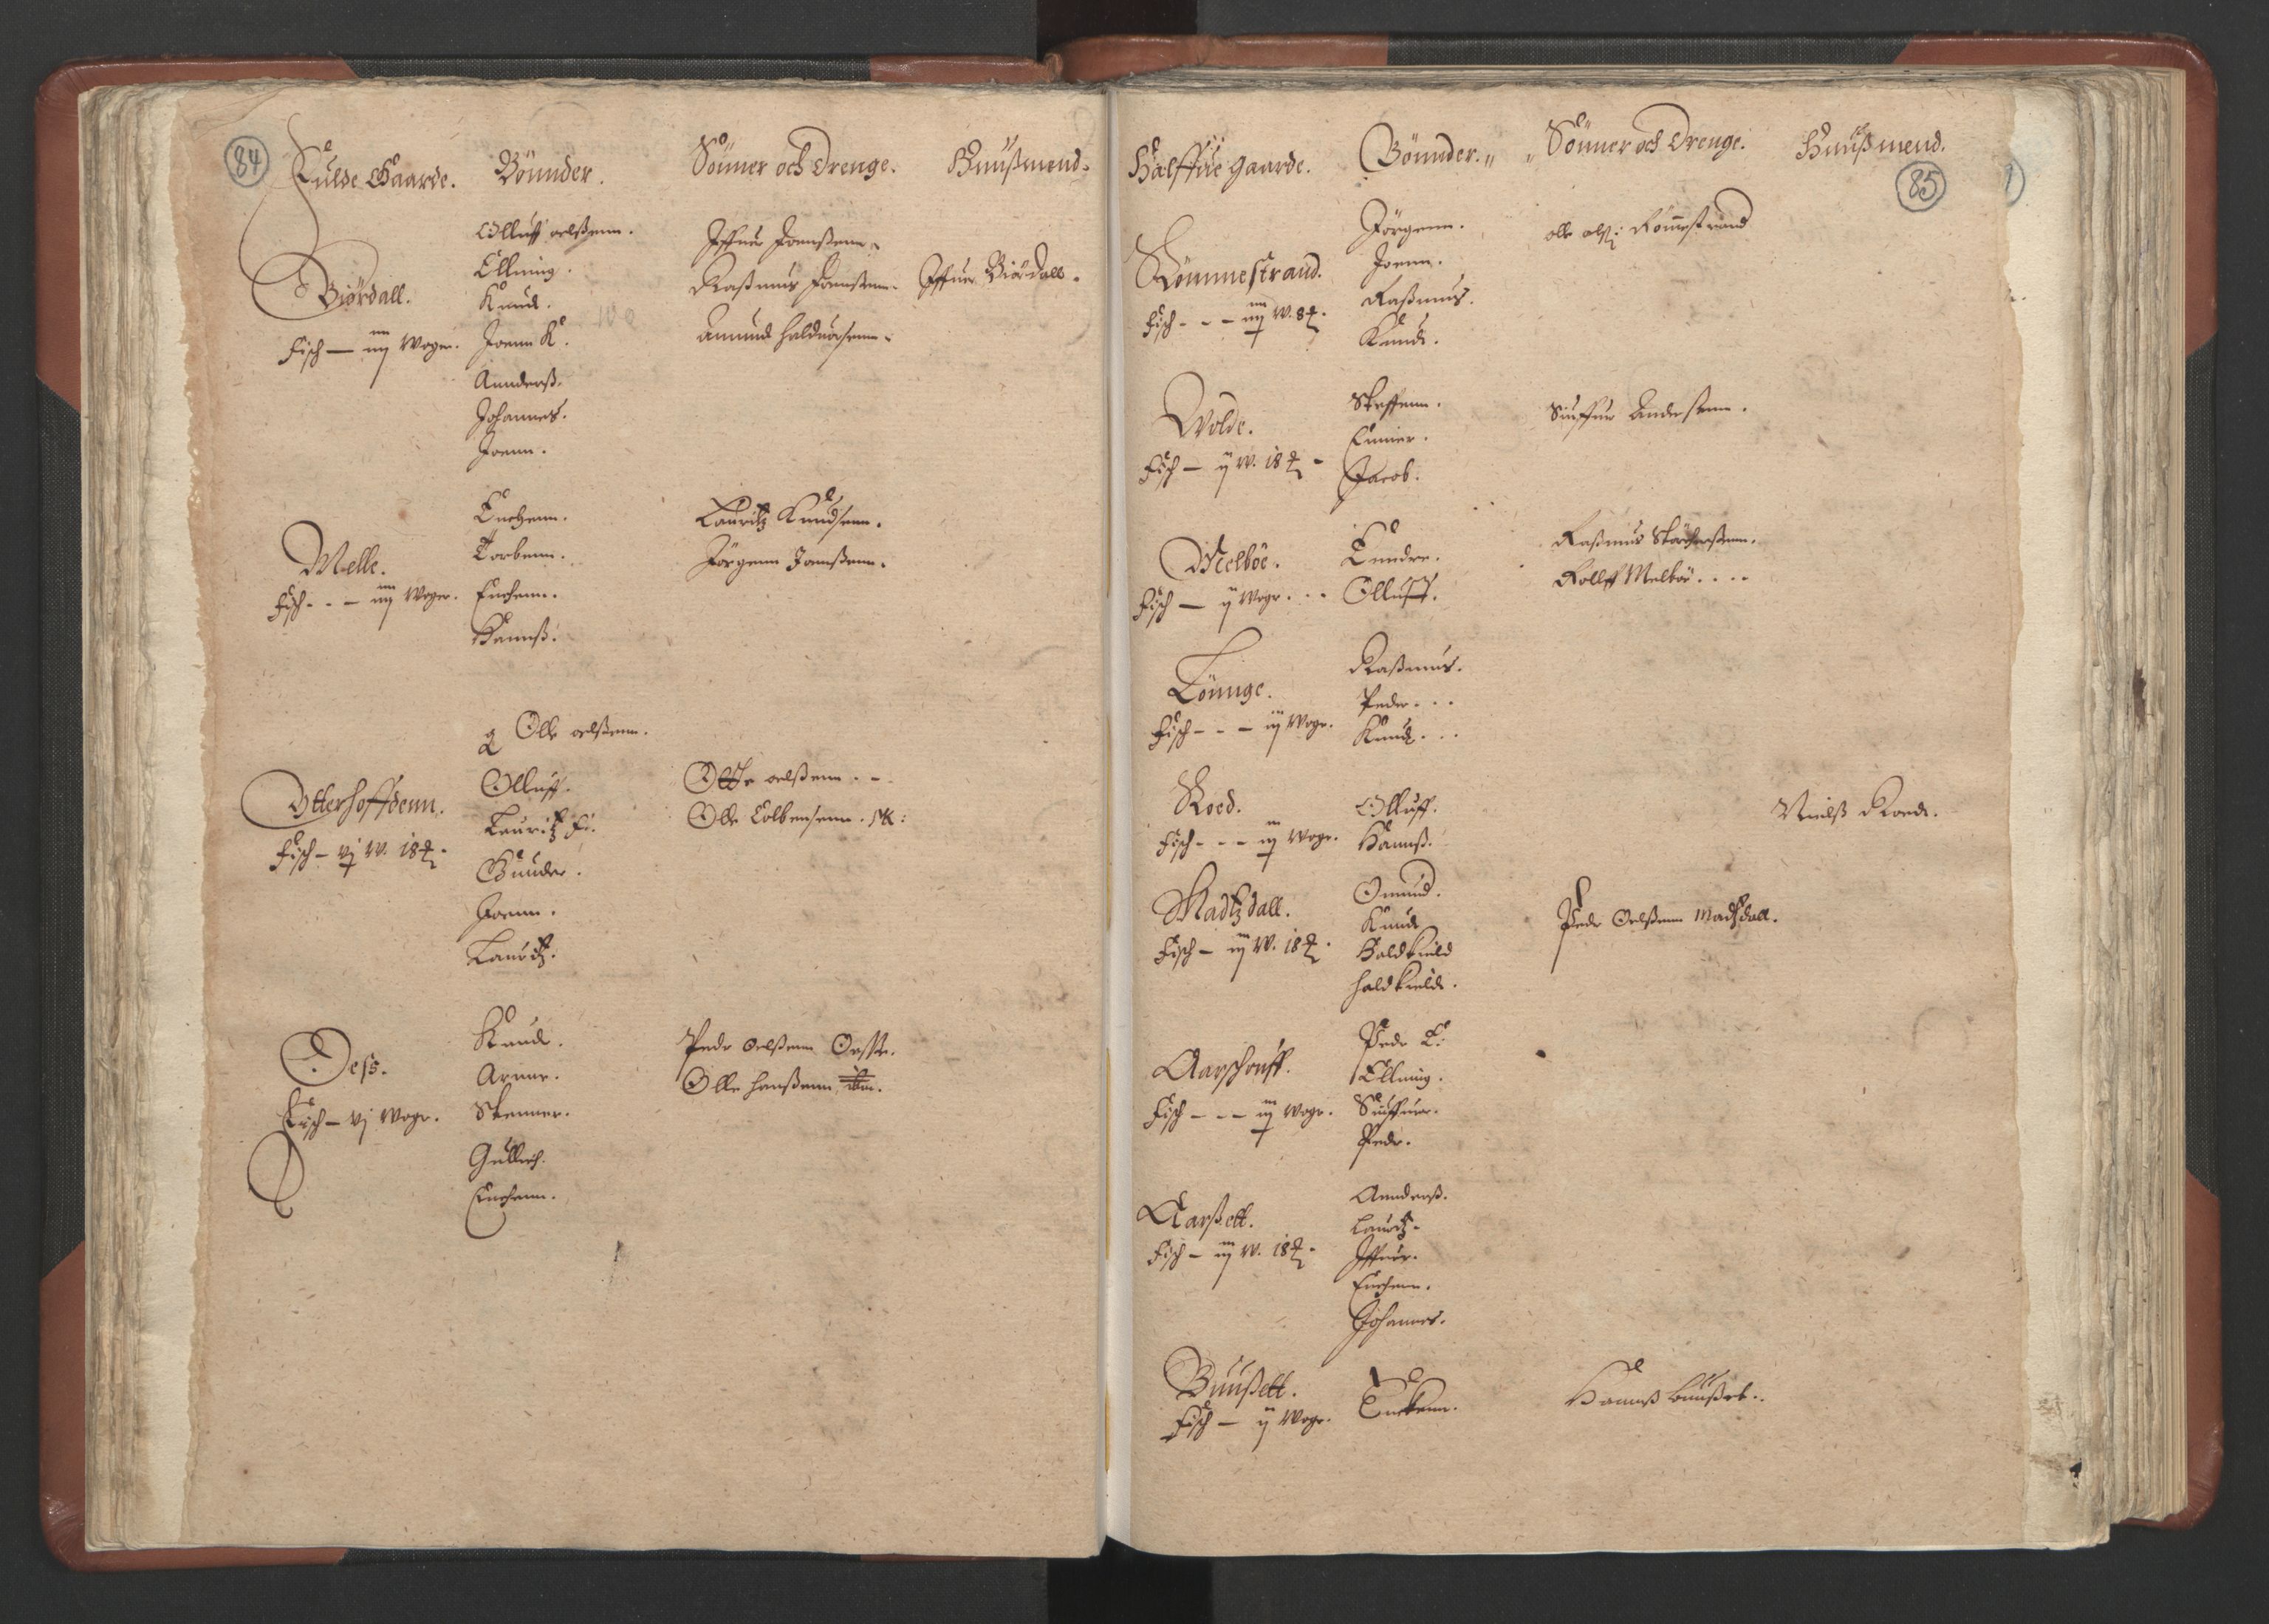 RA, Fogdenes og sorenskrivernes manntall 1664-1666, nr. 16: Romsdal fogderi og Sunnmøre fogderi, 1664-1665, s. 84-85